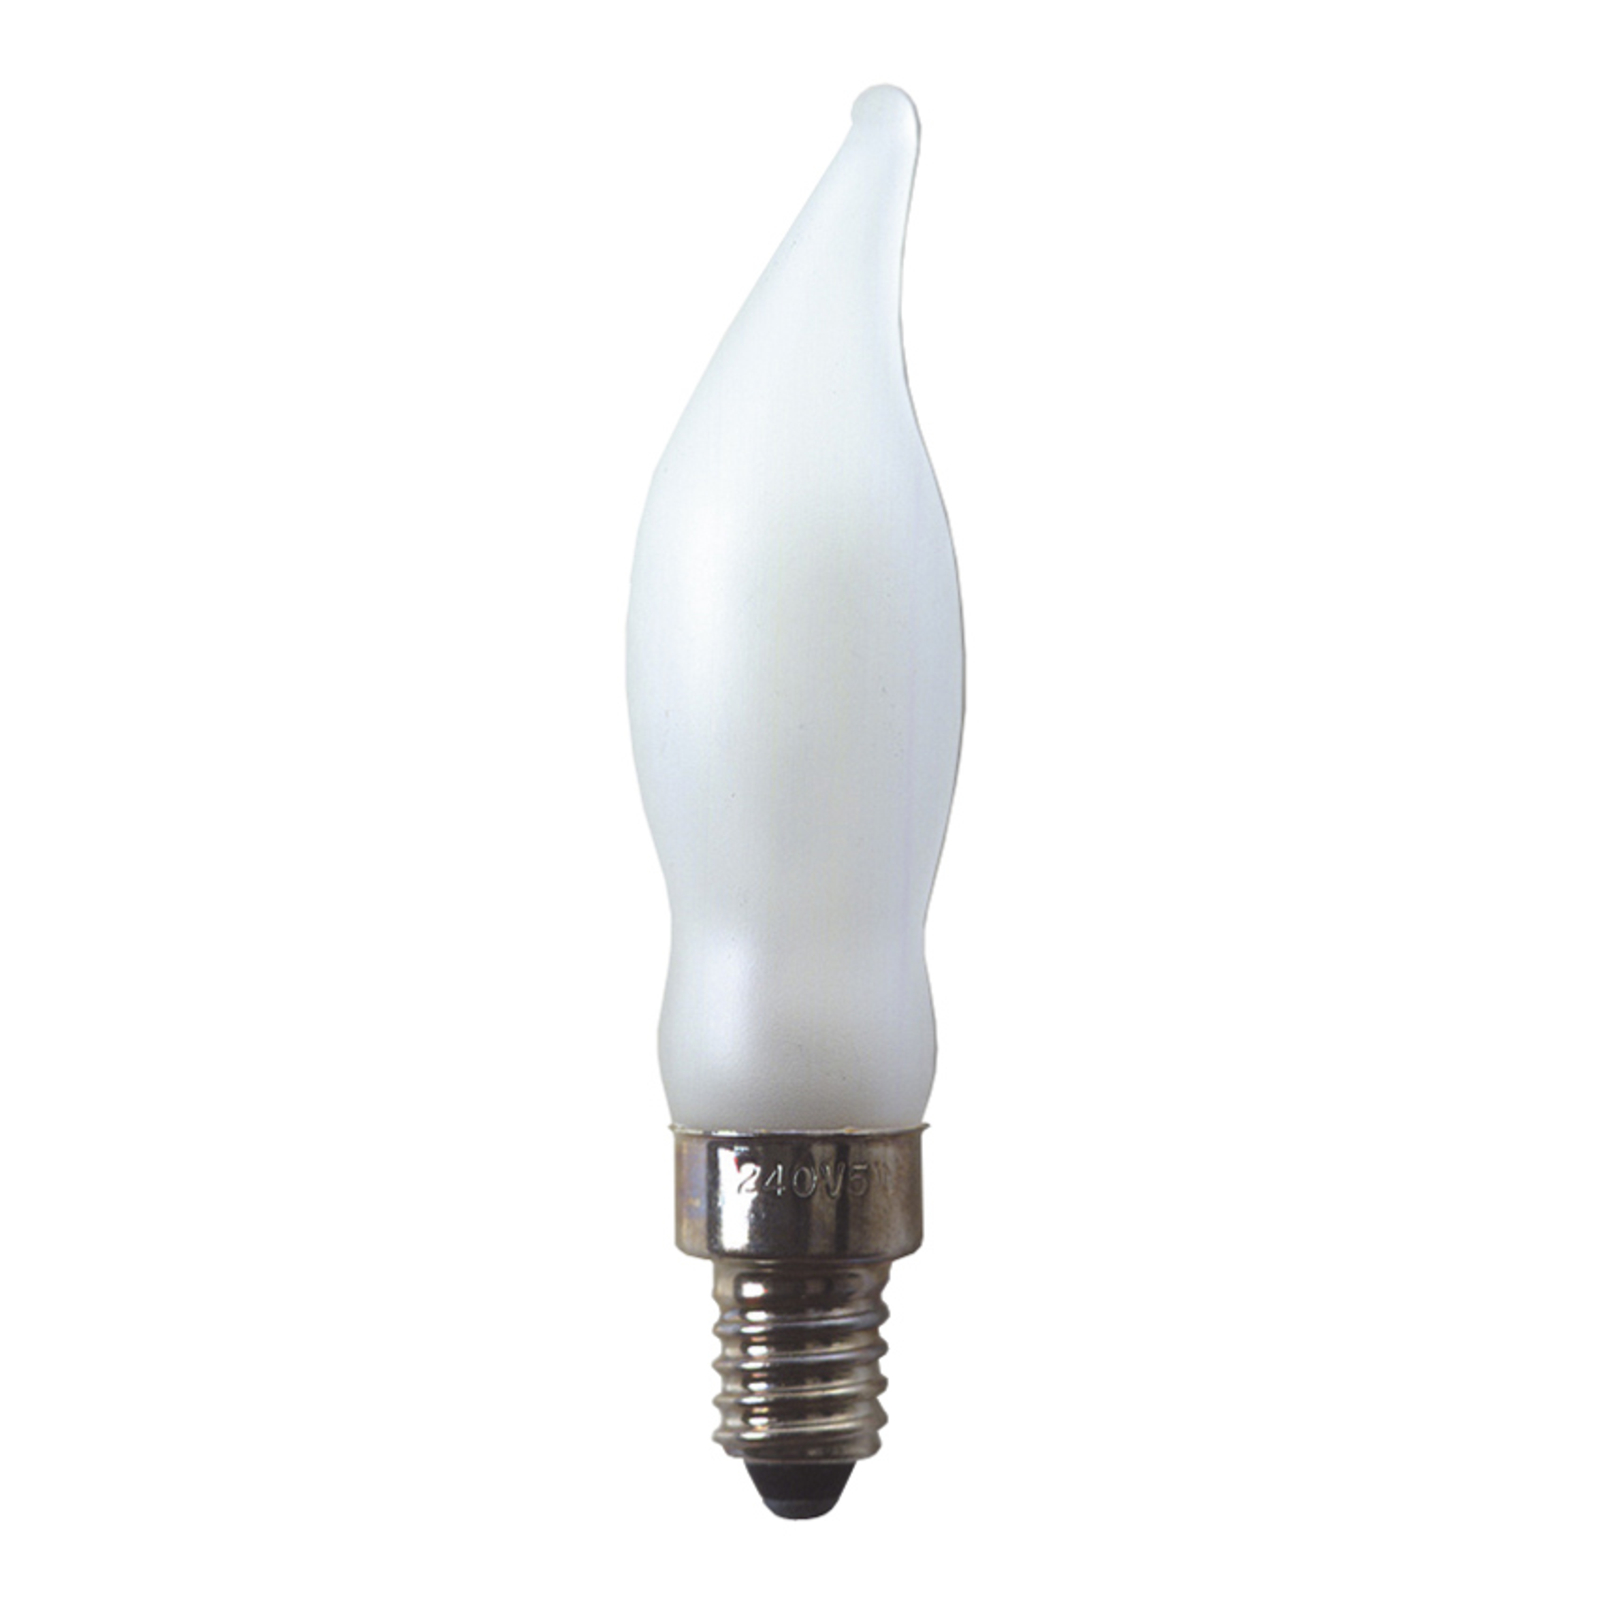 E10 0.6 W 230 V LED replacement bulb, set of 2